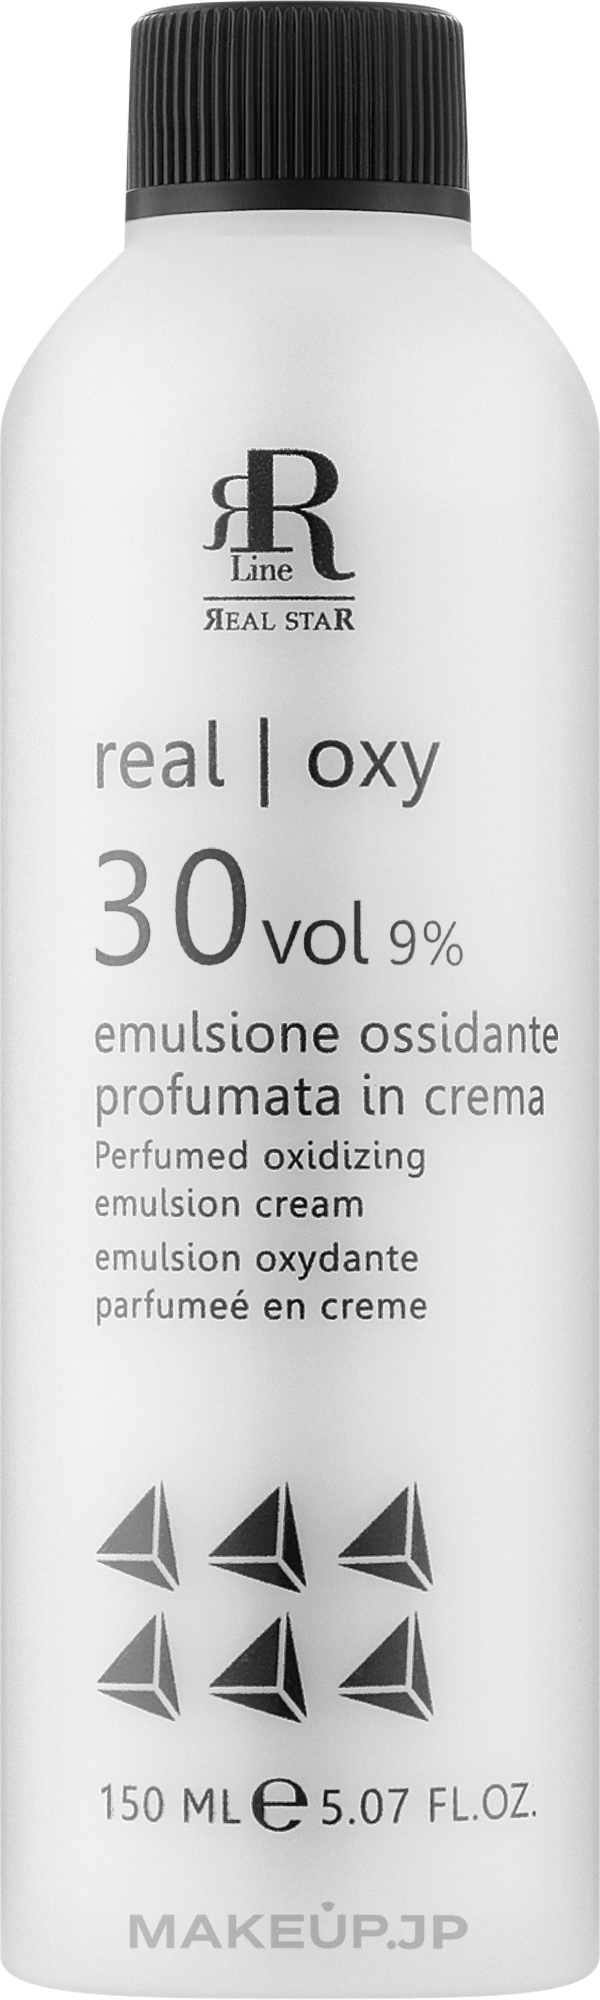 Perfumed Oxidizing Emulsion 9% - RR Line Parfymed Ossidante Emulsione Cream 9% 30 Vol — photo 150 ml